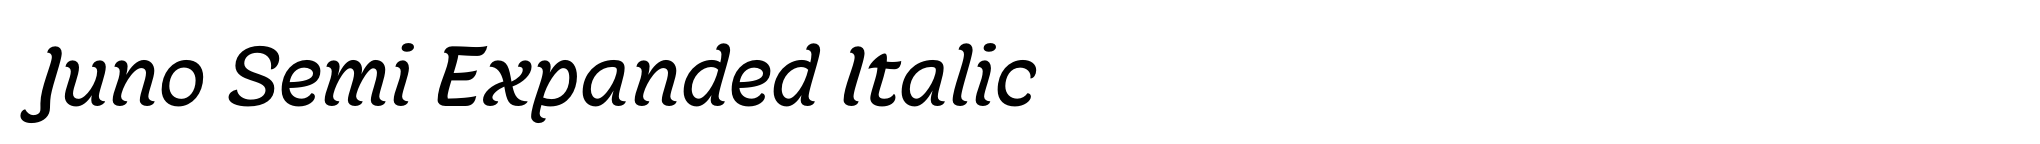 Juno Semi Expanded Italic image